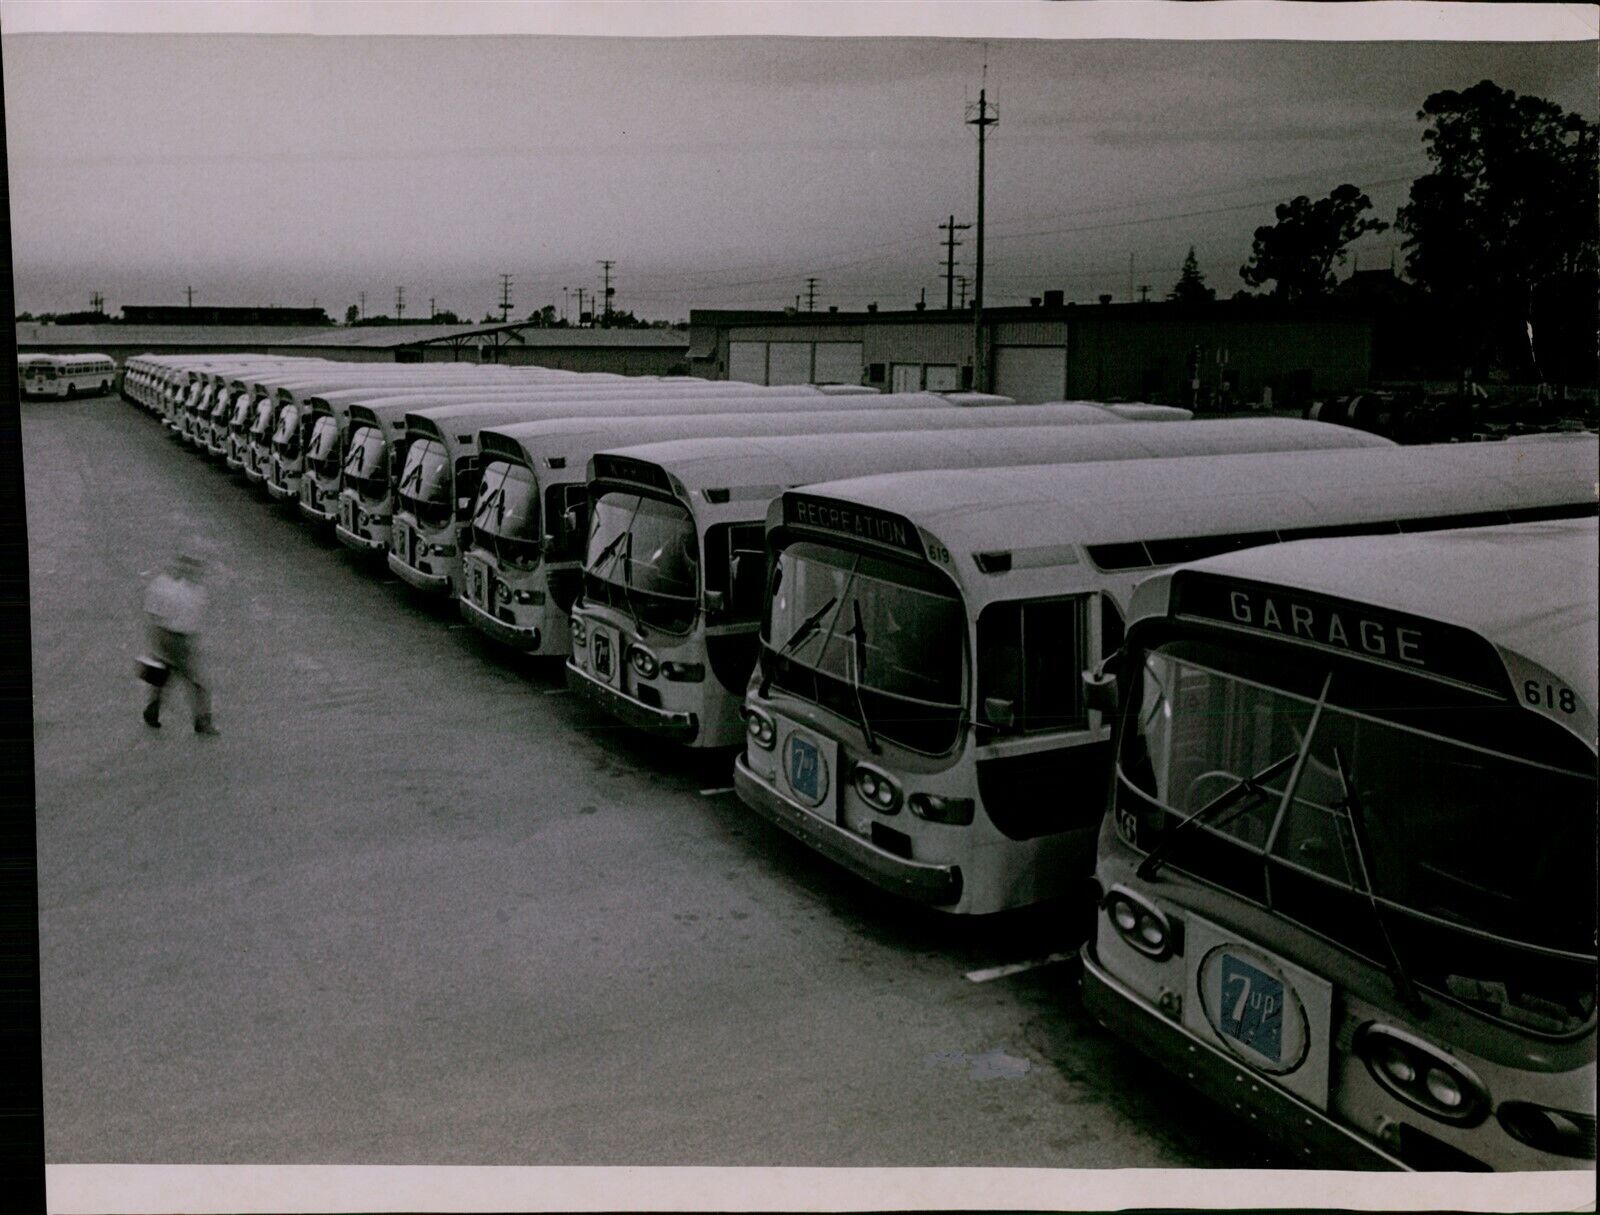 LG865 1965 Orig Savaria Photo FRESNO CITY BUSES Parked in Lot Public Transport